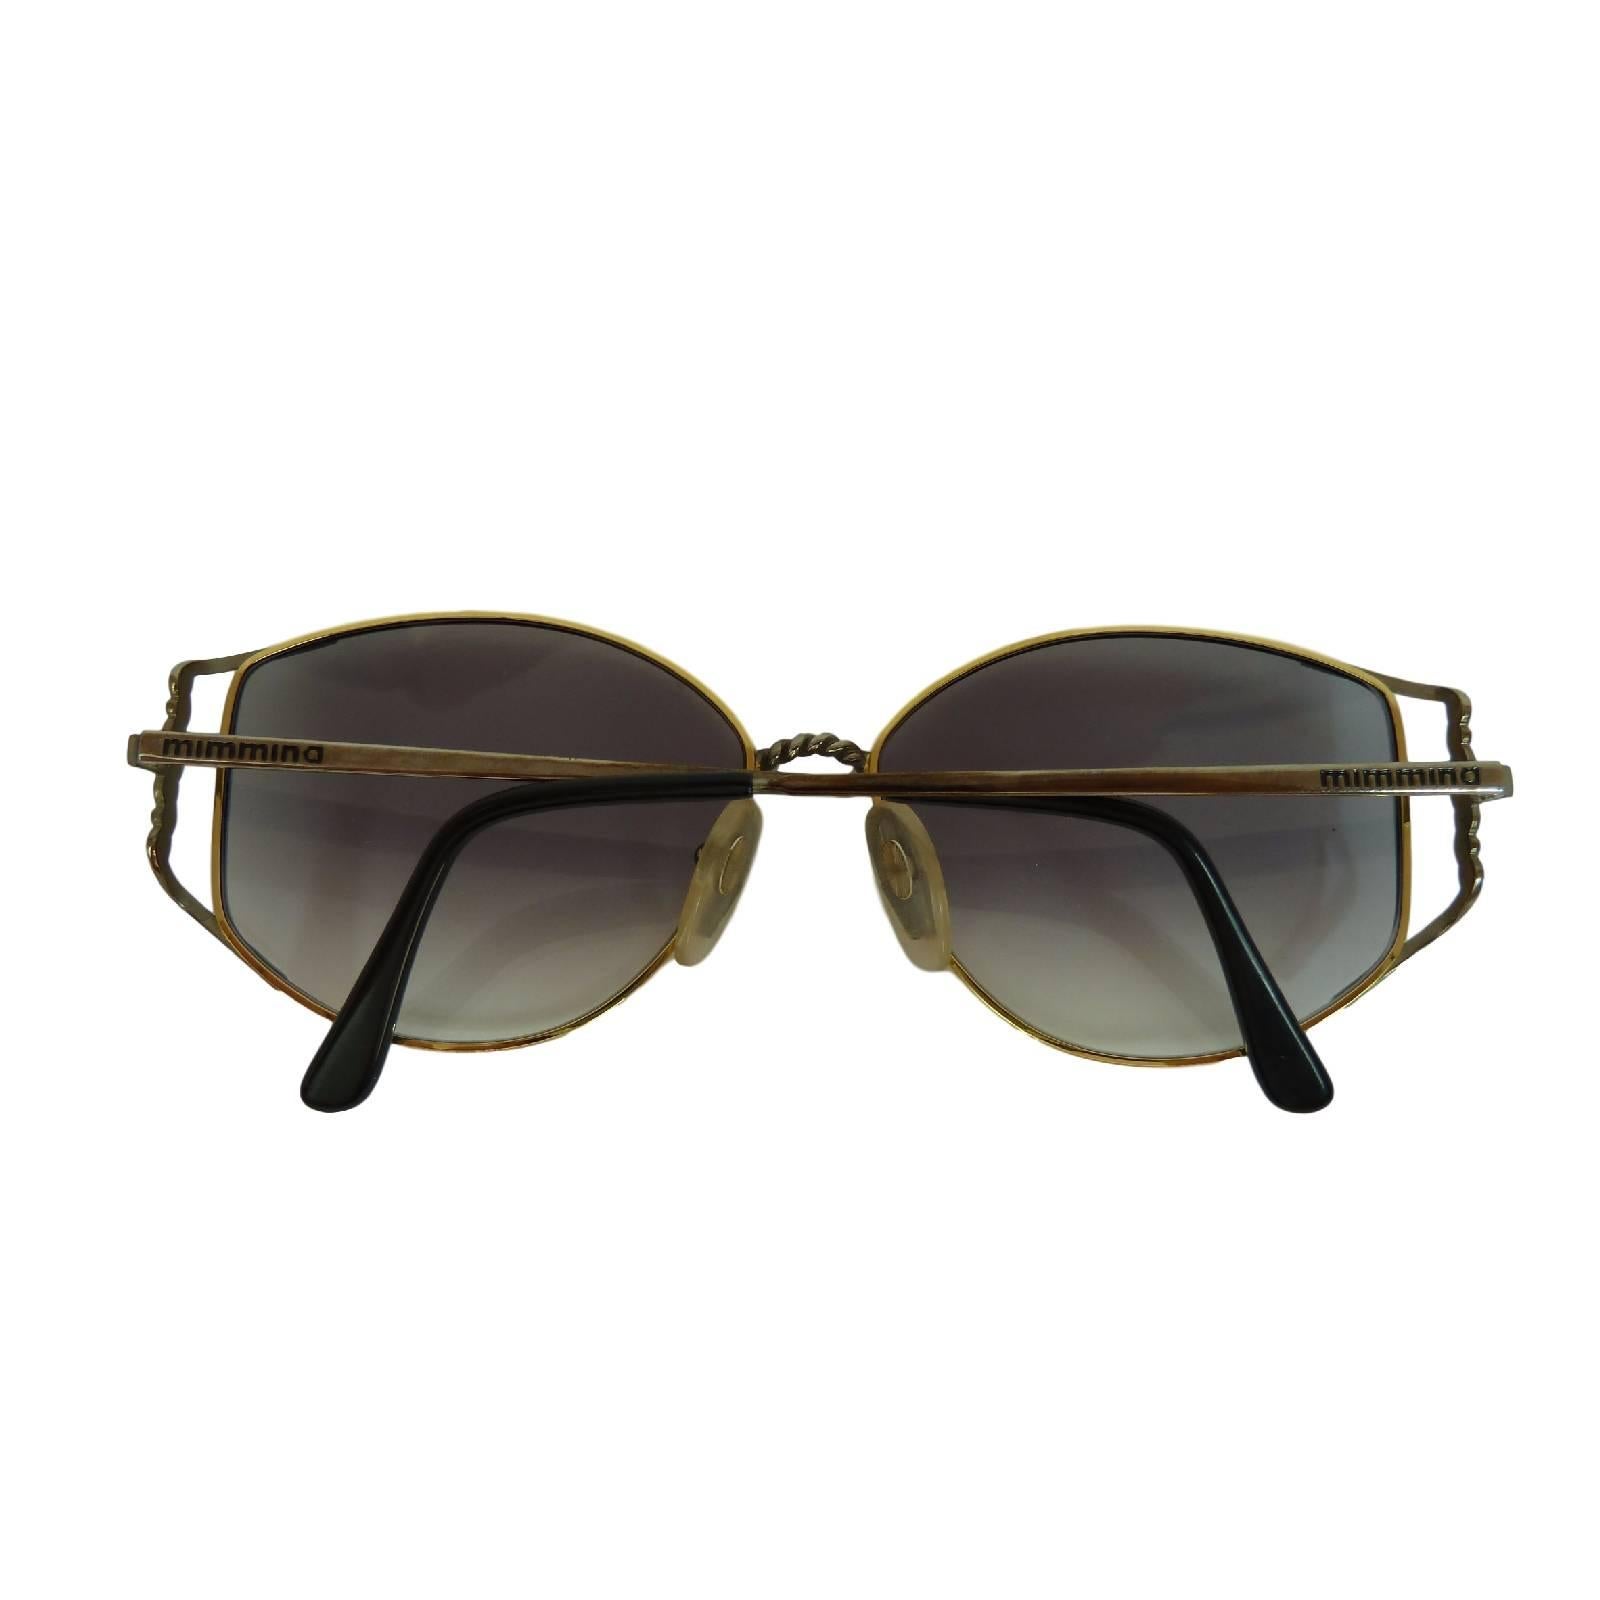 Mimmina R 119 Gold Color Frame Gray Shape Italian Sunglasses, 1980 For Sale 4